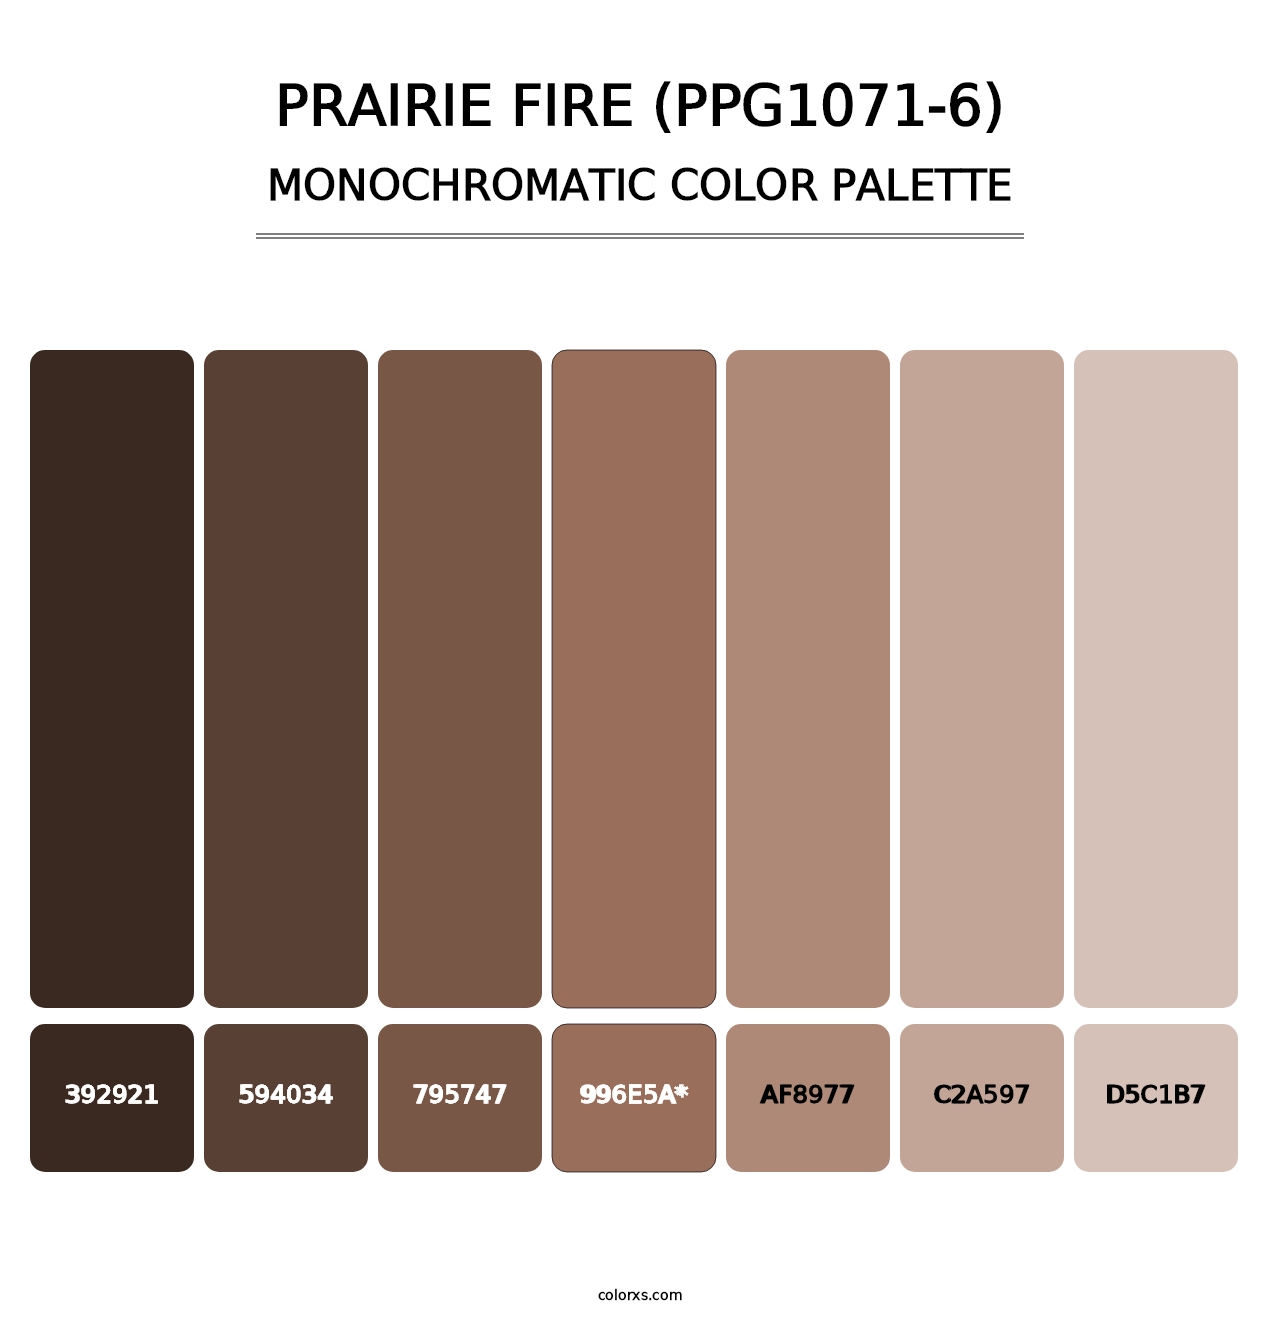 Prairie Fire (PPG1071-6) - Monochromatic Color Palette